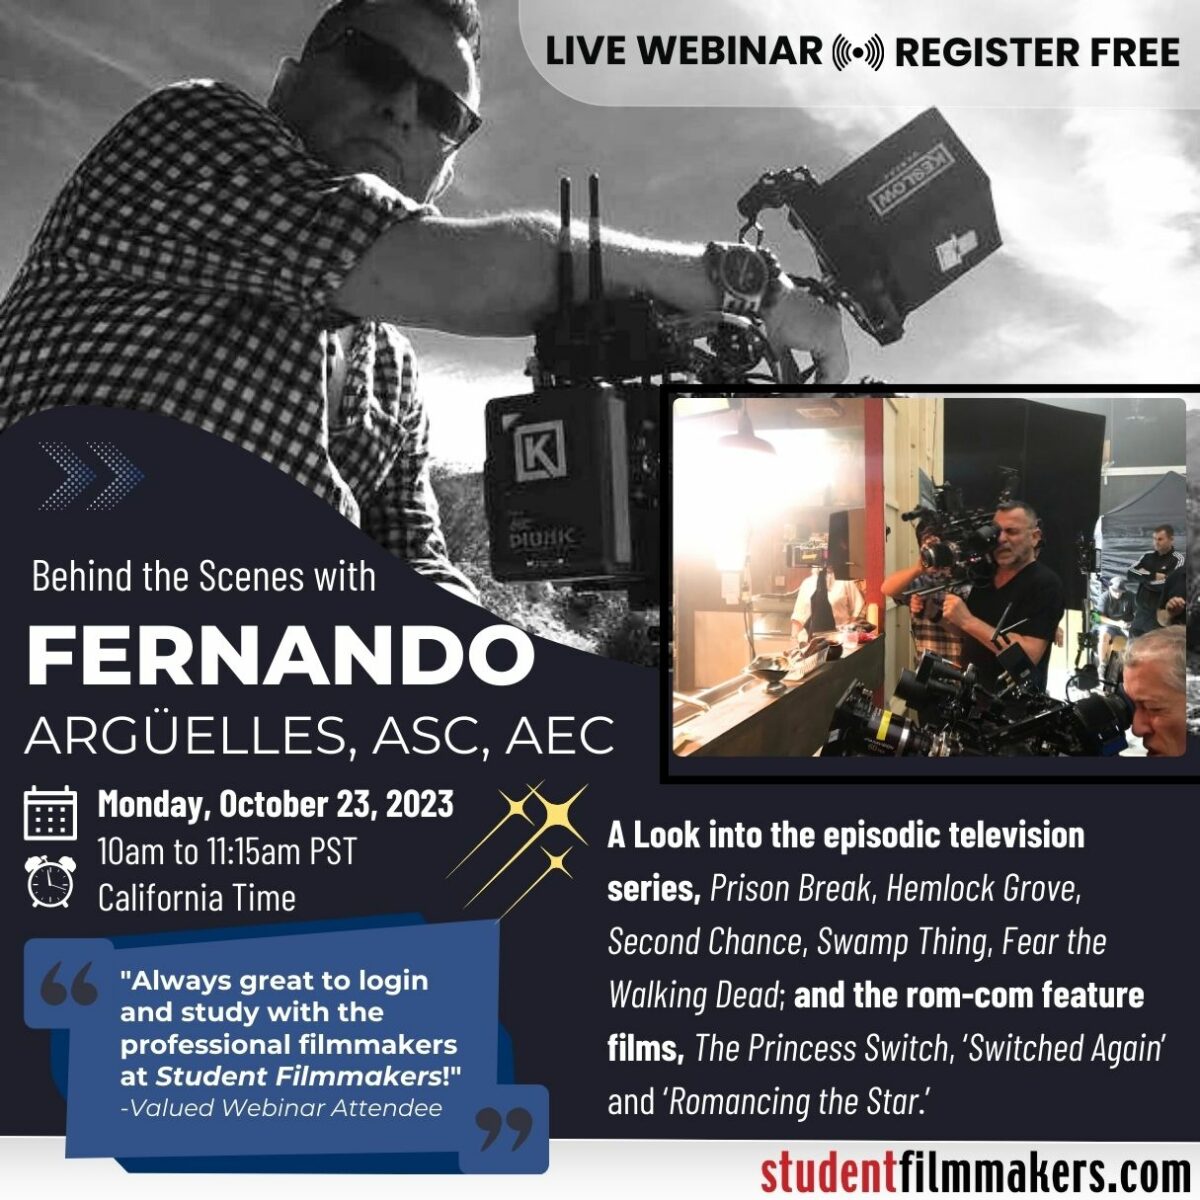 Register FREE! Live Webinar Monday! "A Conversation with Fernando Argüelles ASC, AEC" - Join Us October 23, 2023, 10am PST (California Time)